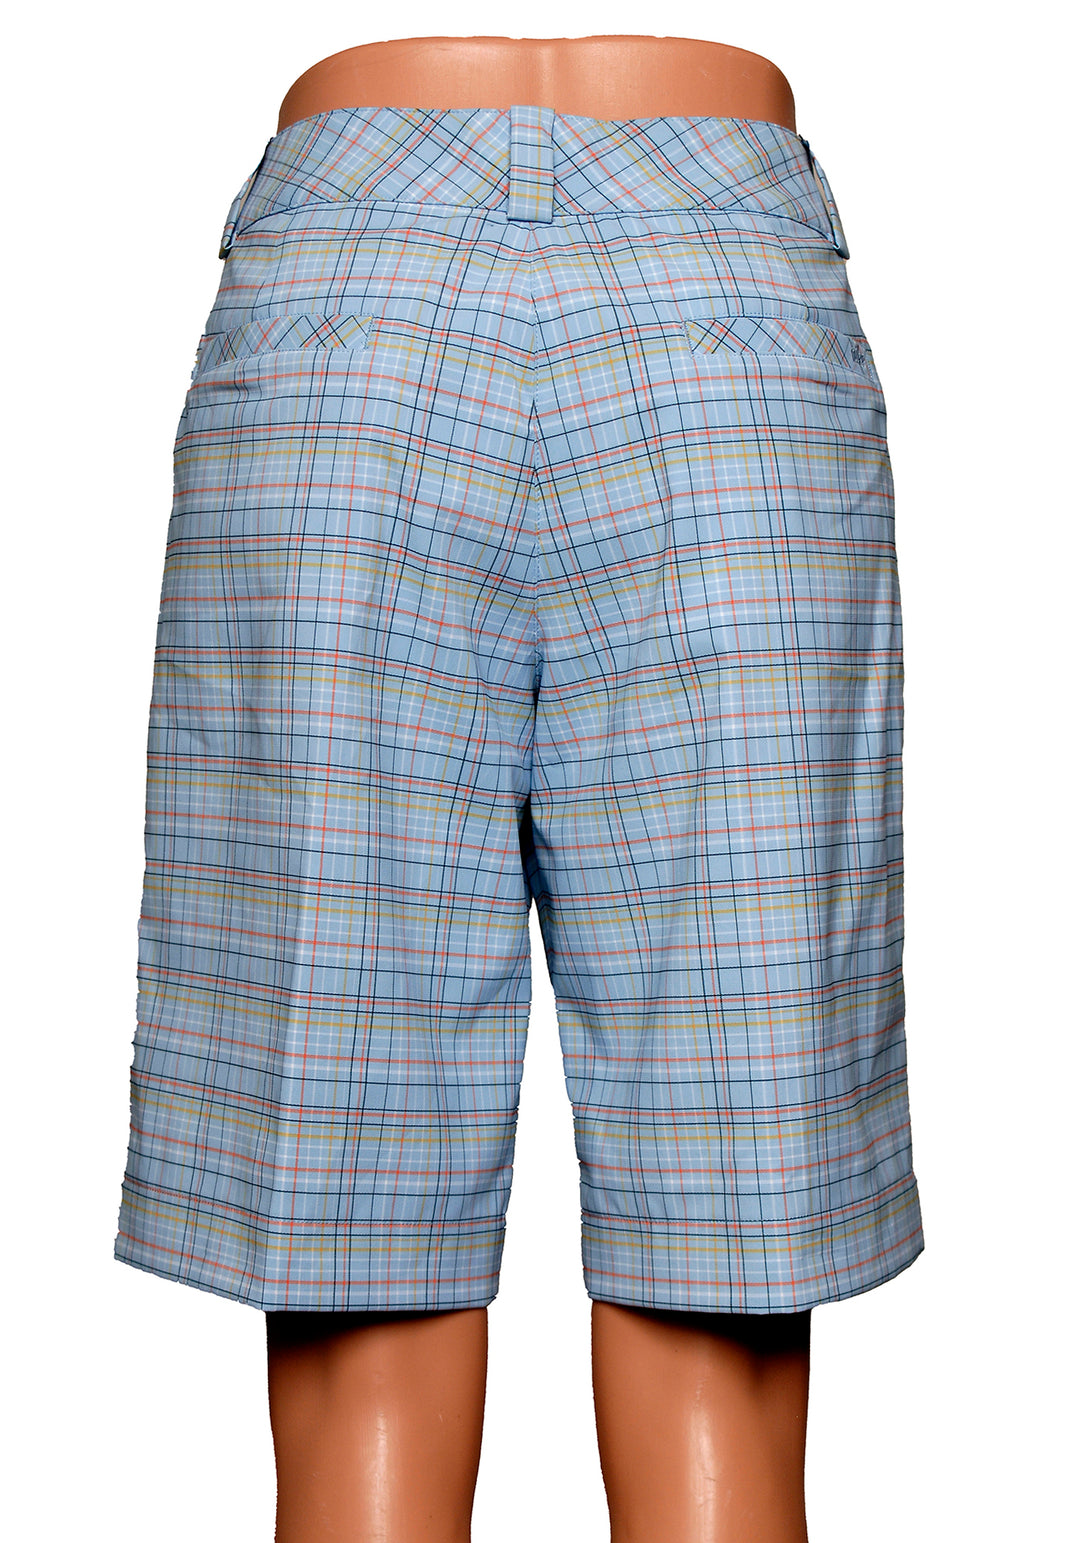 Nike Fit Dry Bermuda Plaid Golf Short - Light Blue - Size 8 - Skorzie